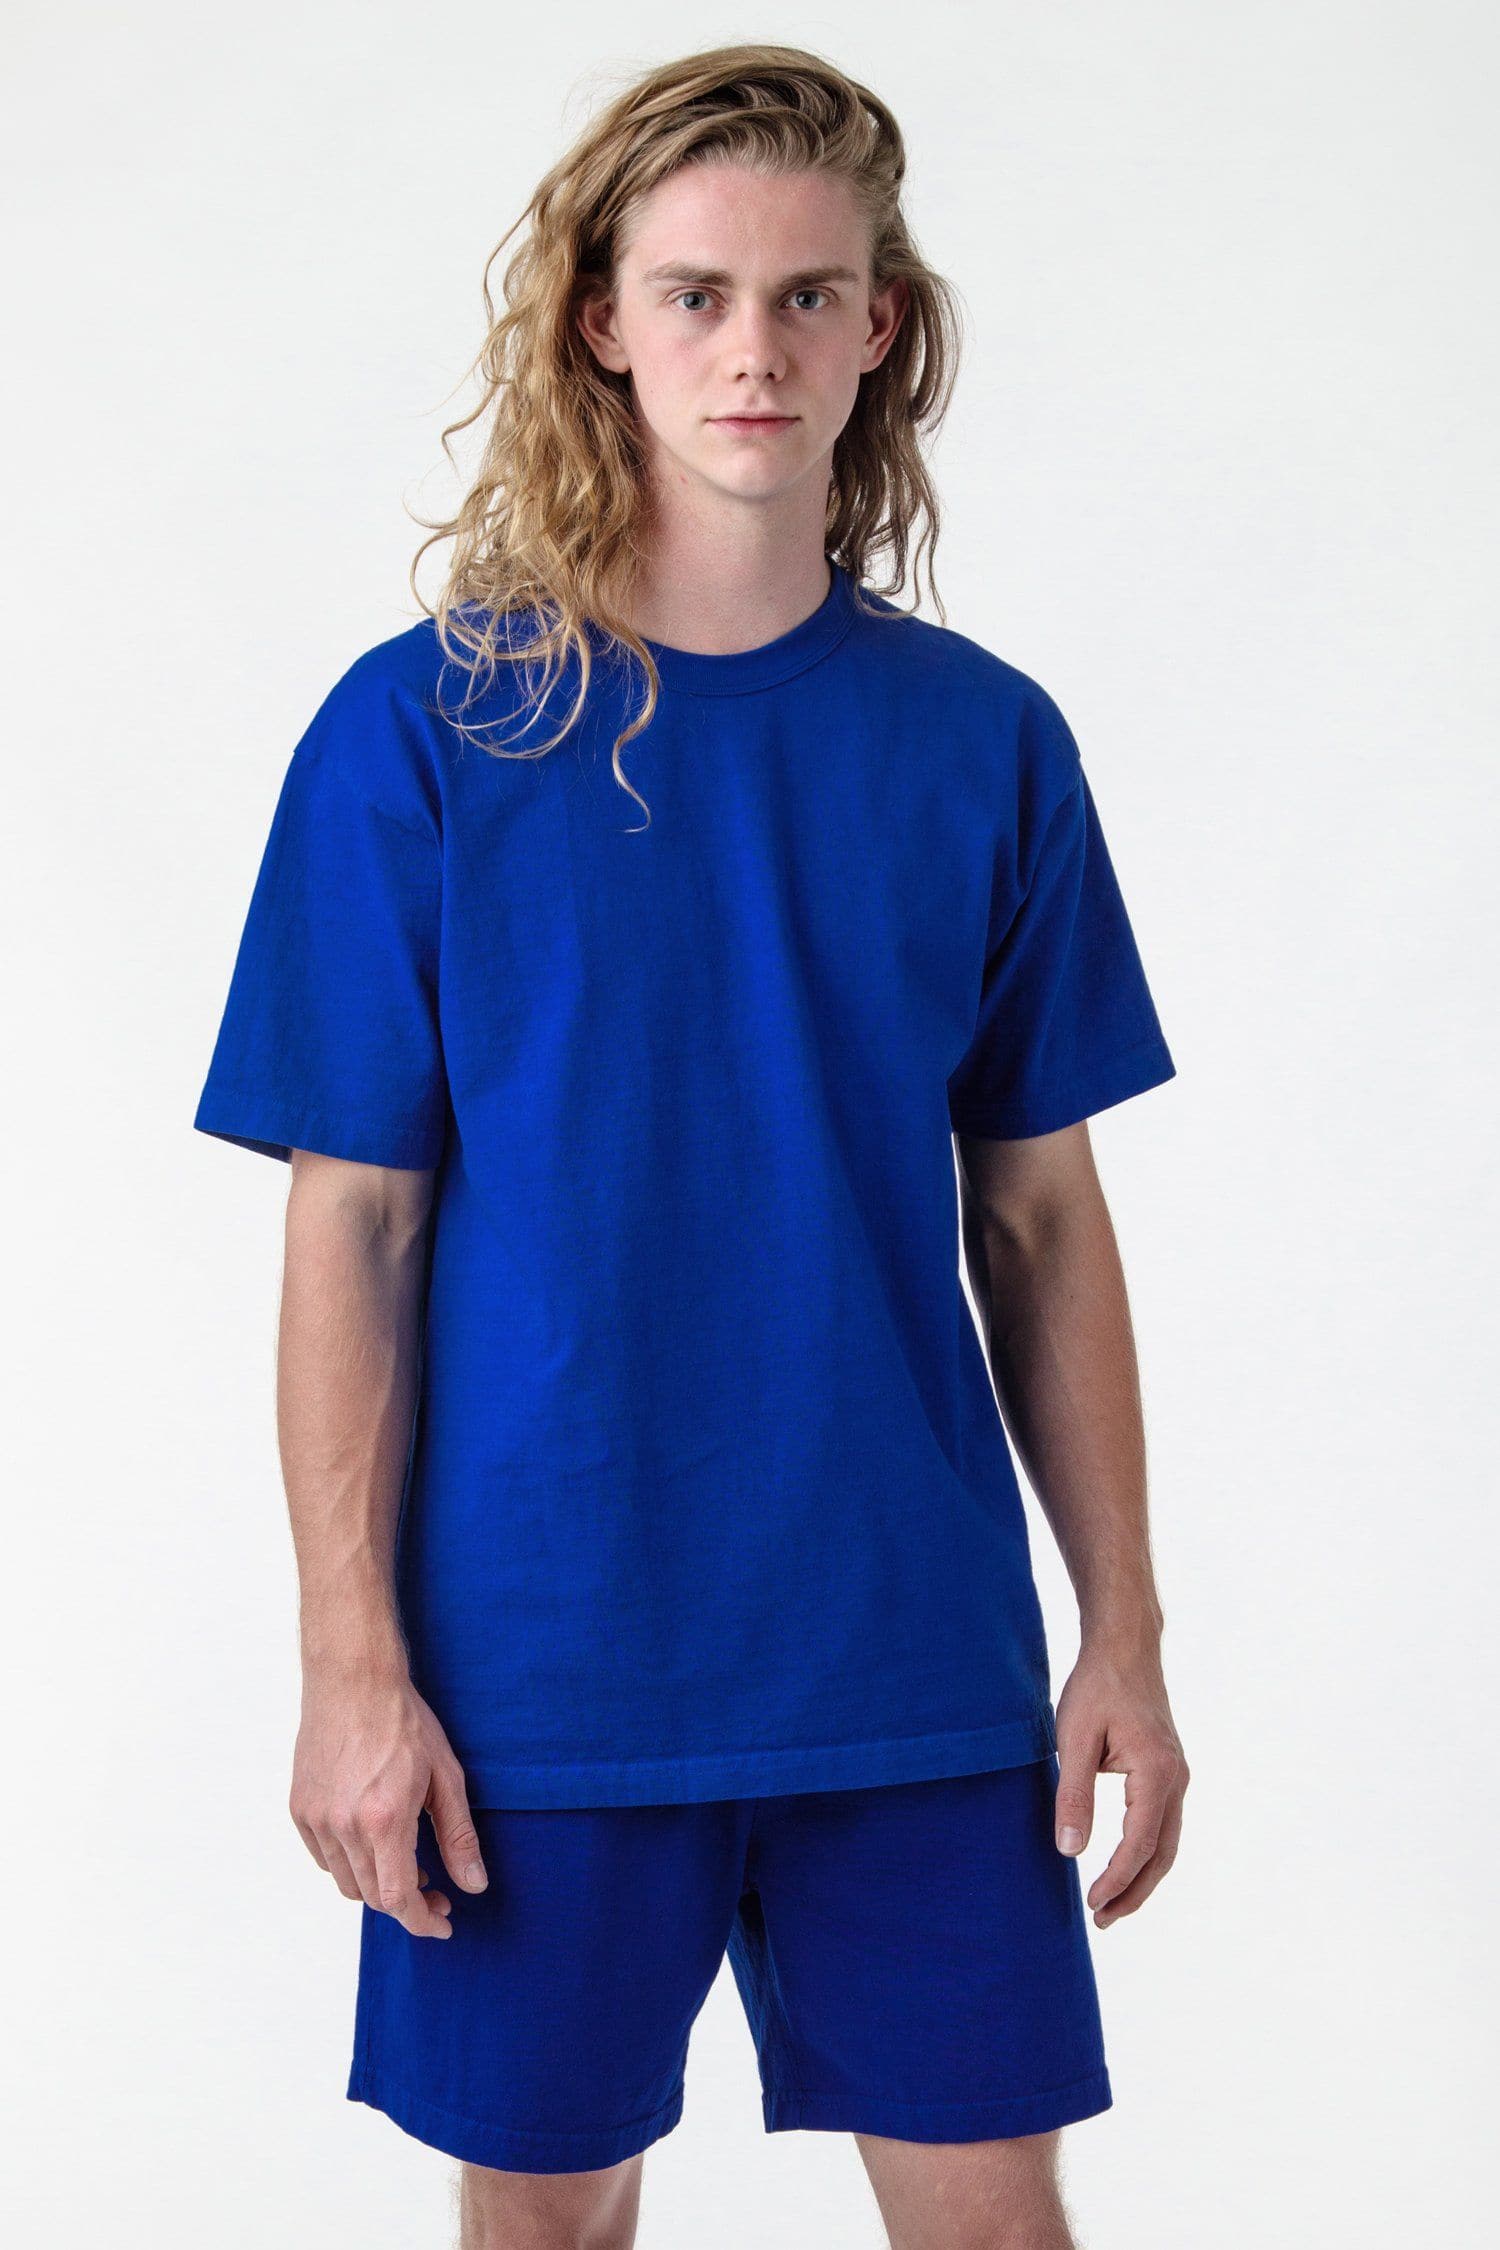 Shedd Shirts Blue La Los Angeles Air Kupp T-Shirt